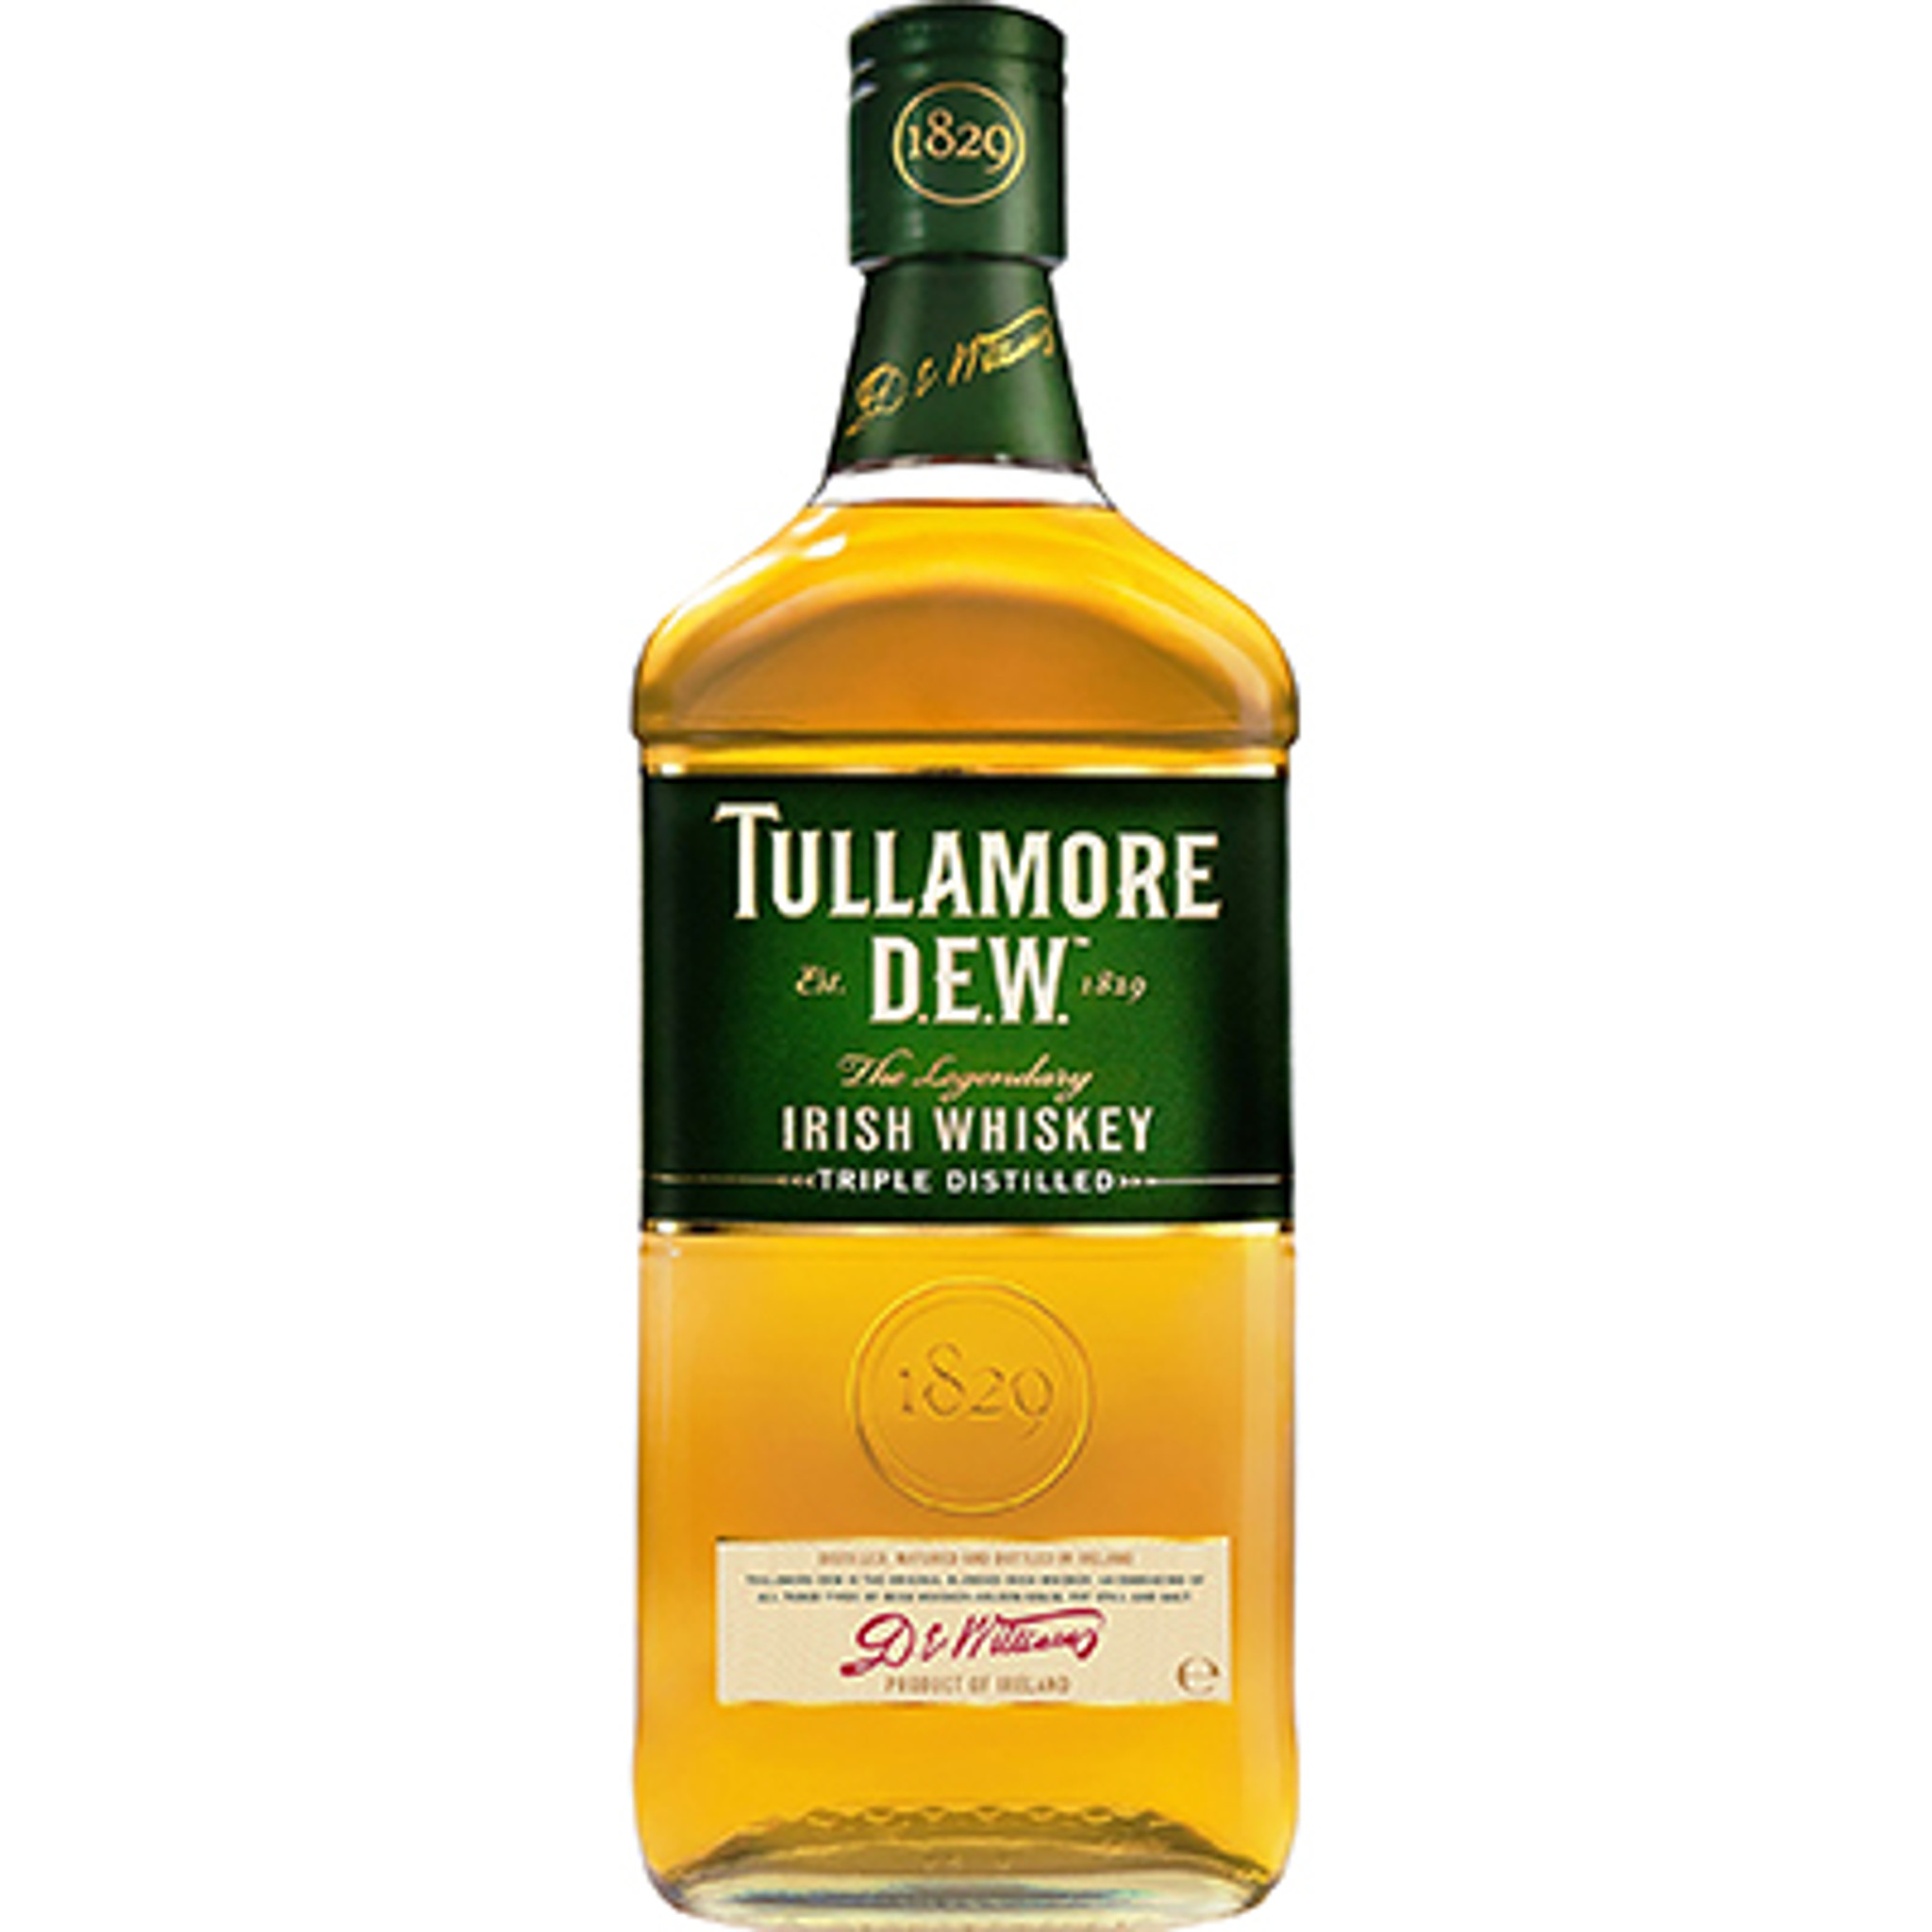 whisky tullamore